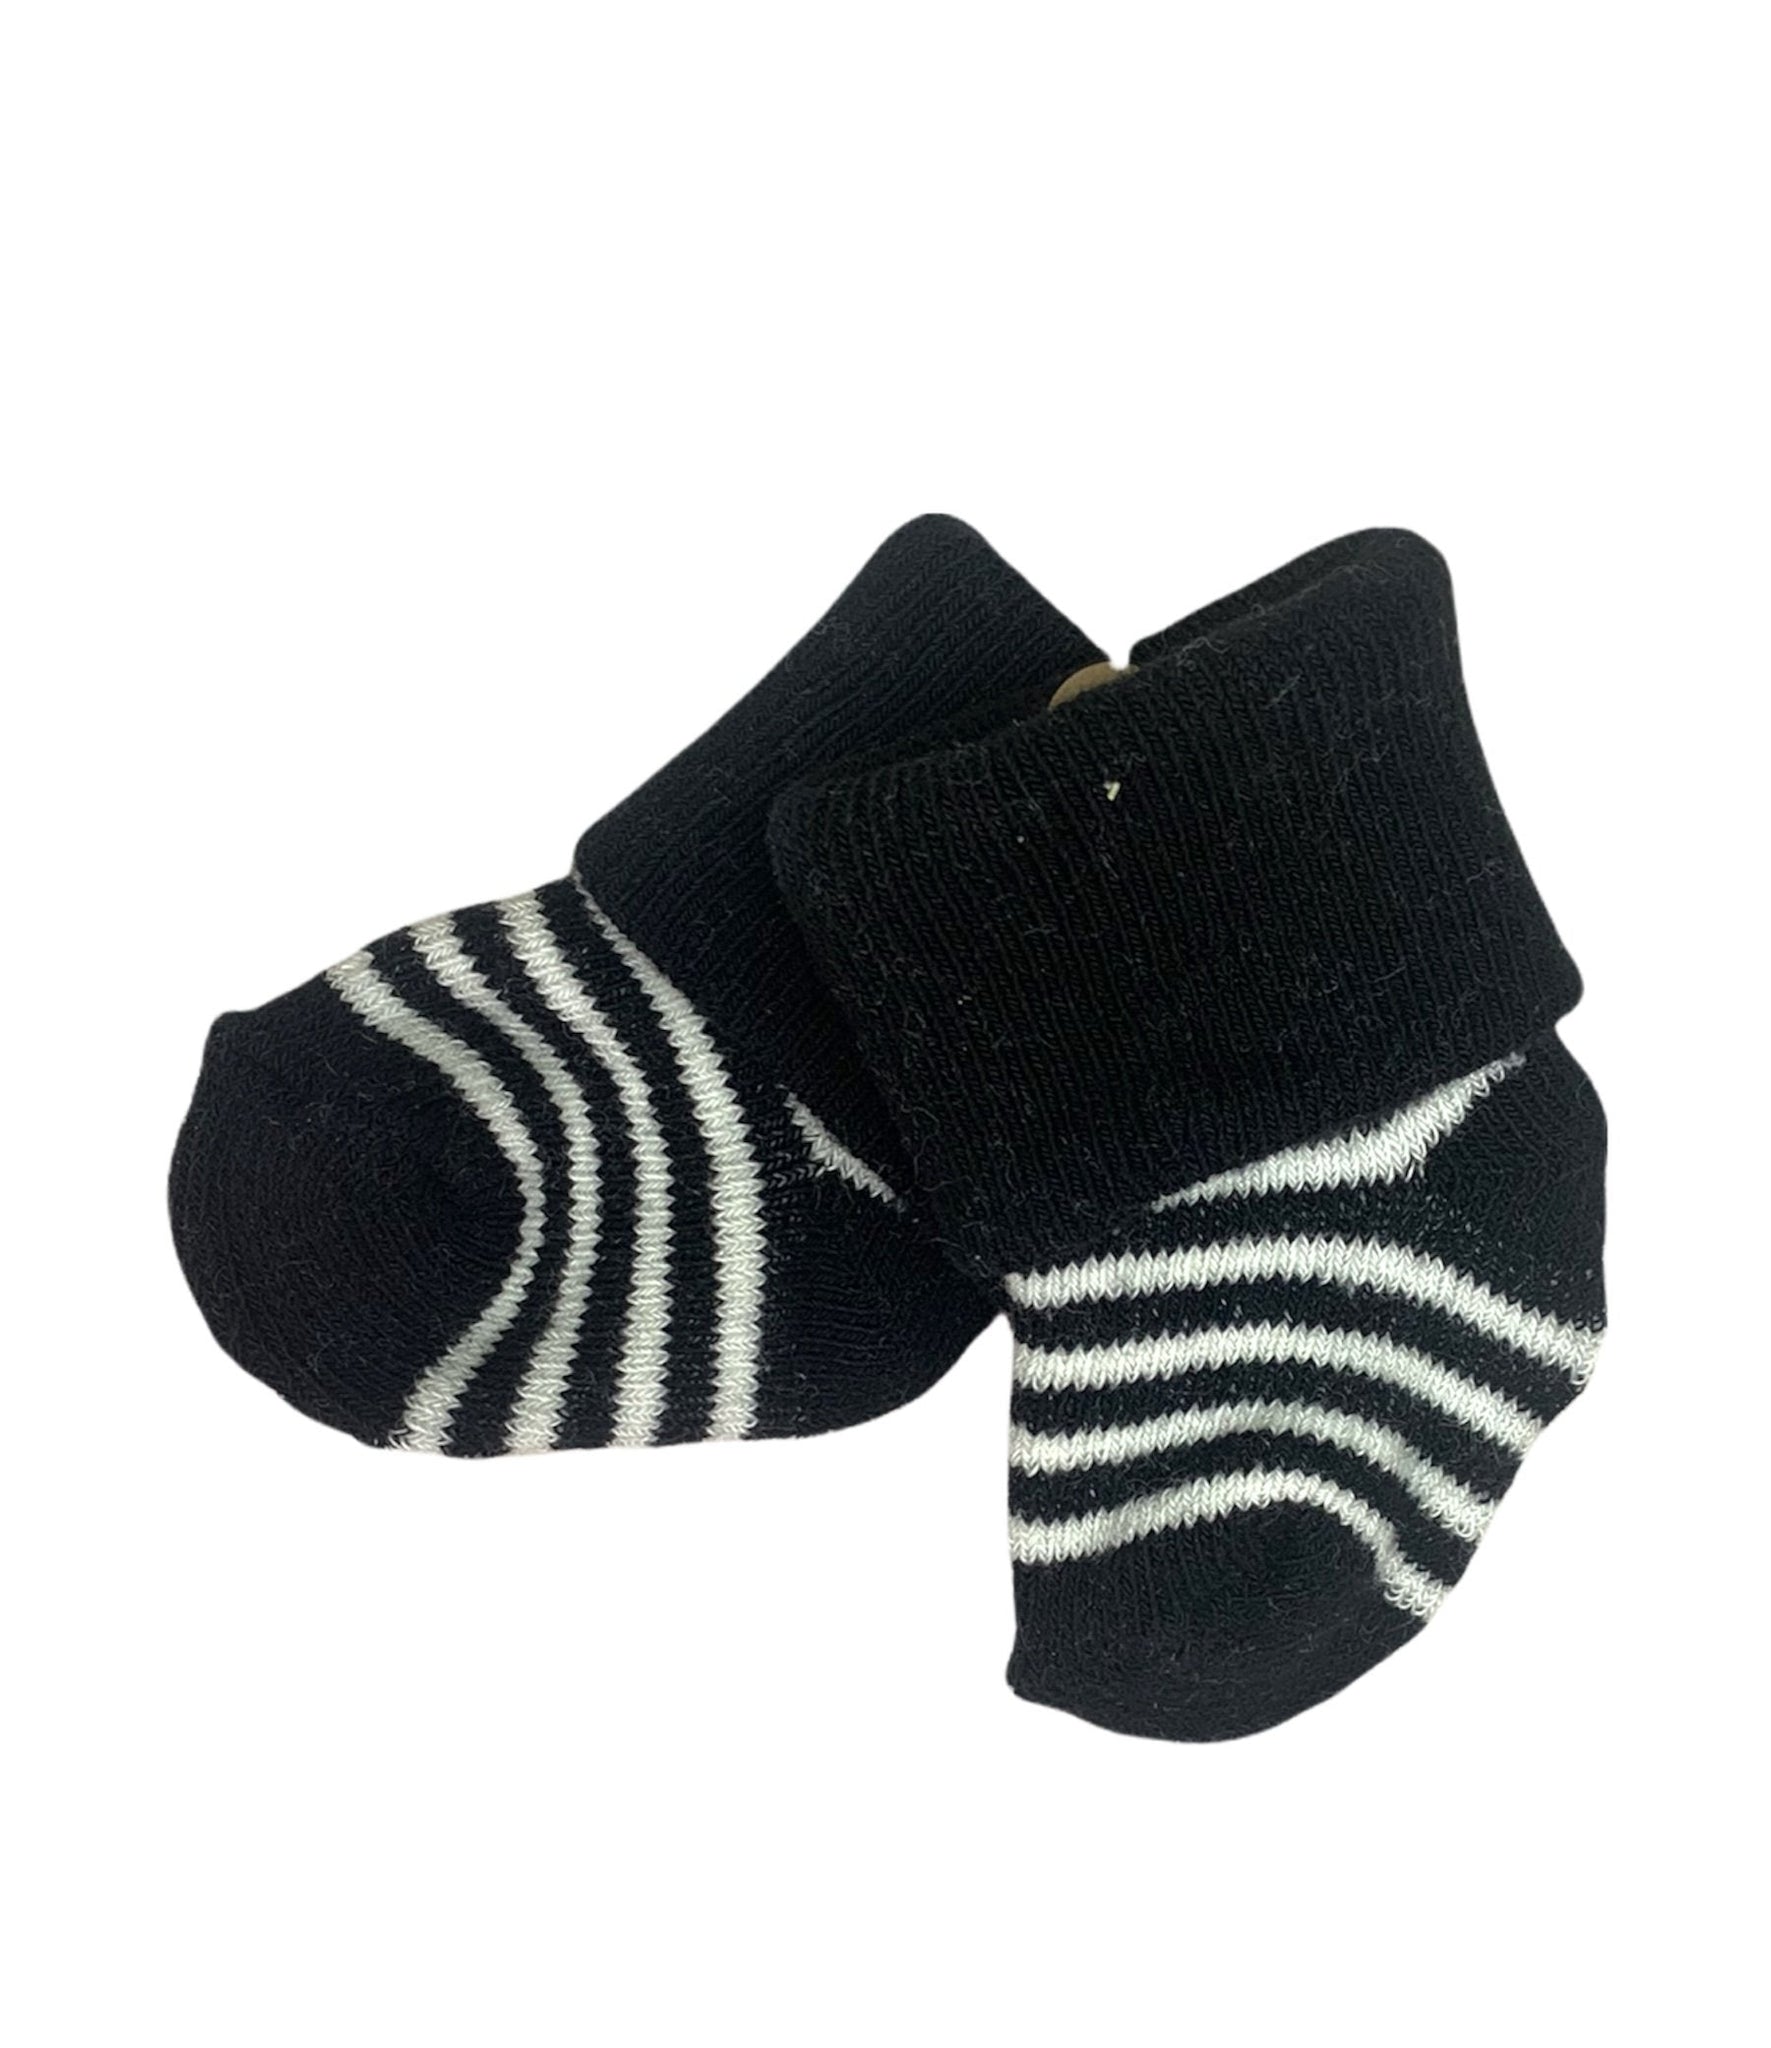 black socks with white stripes